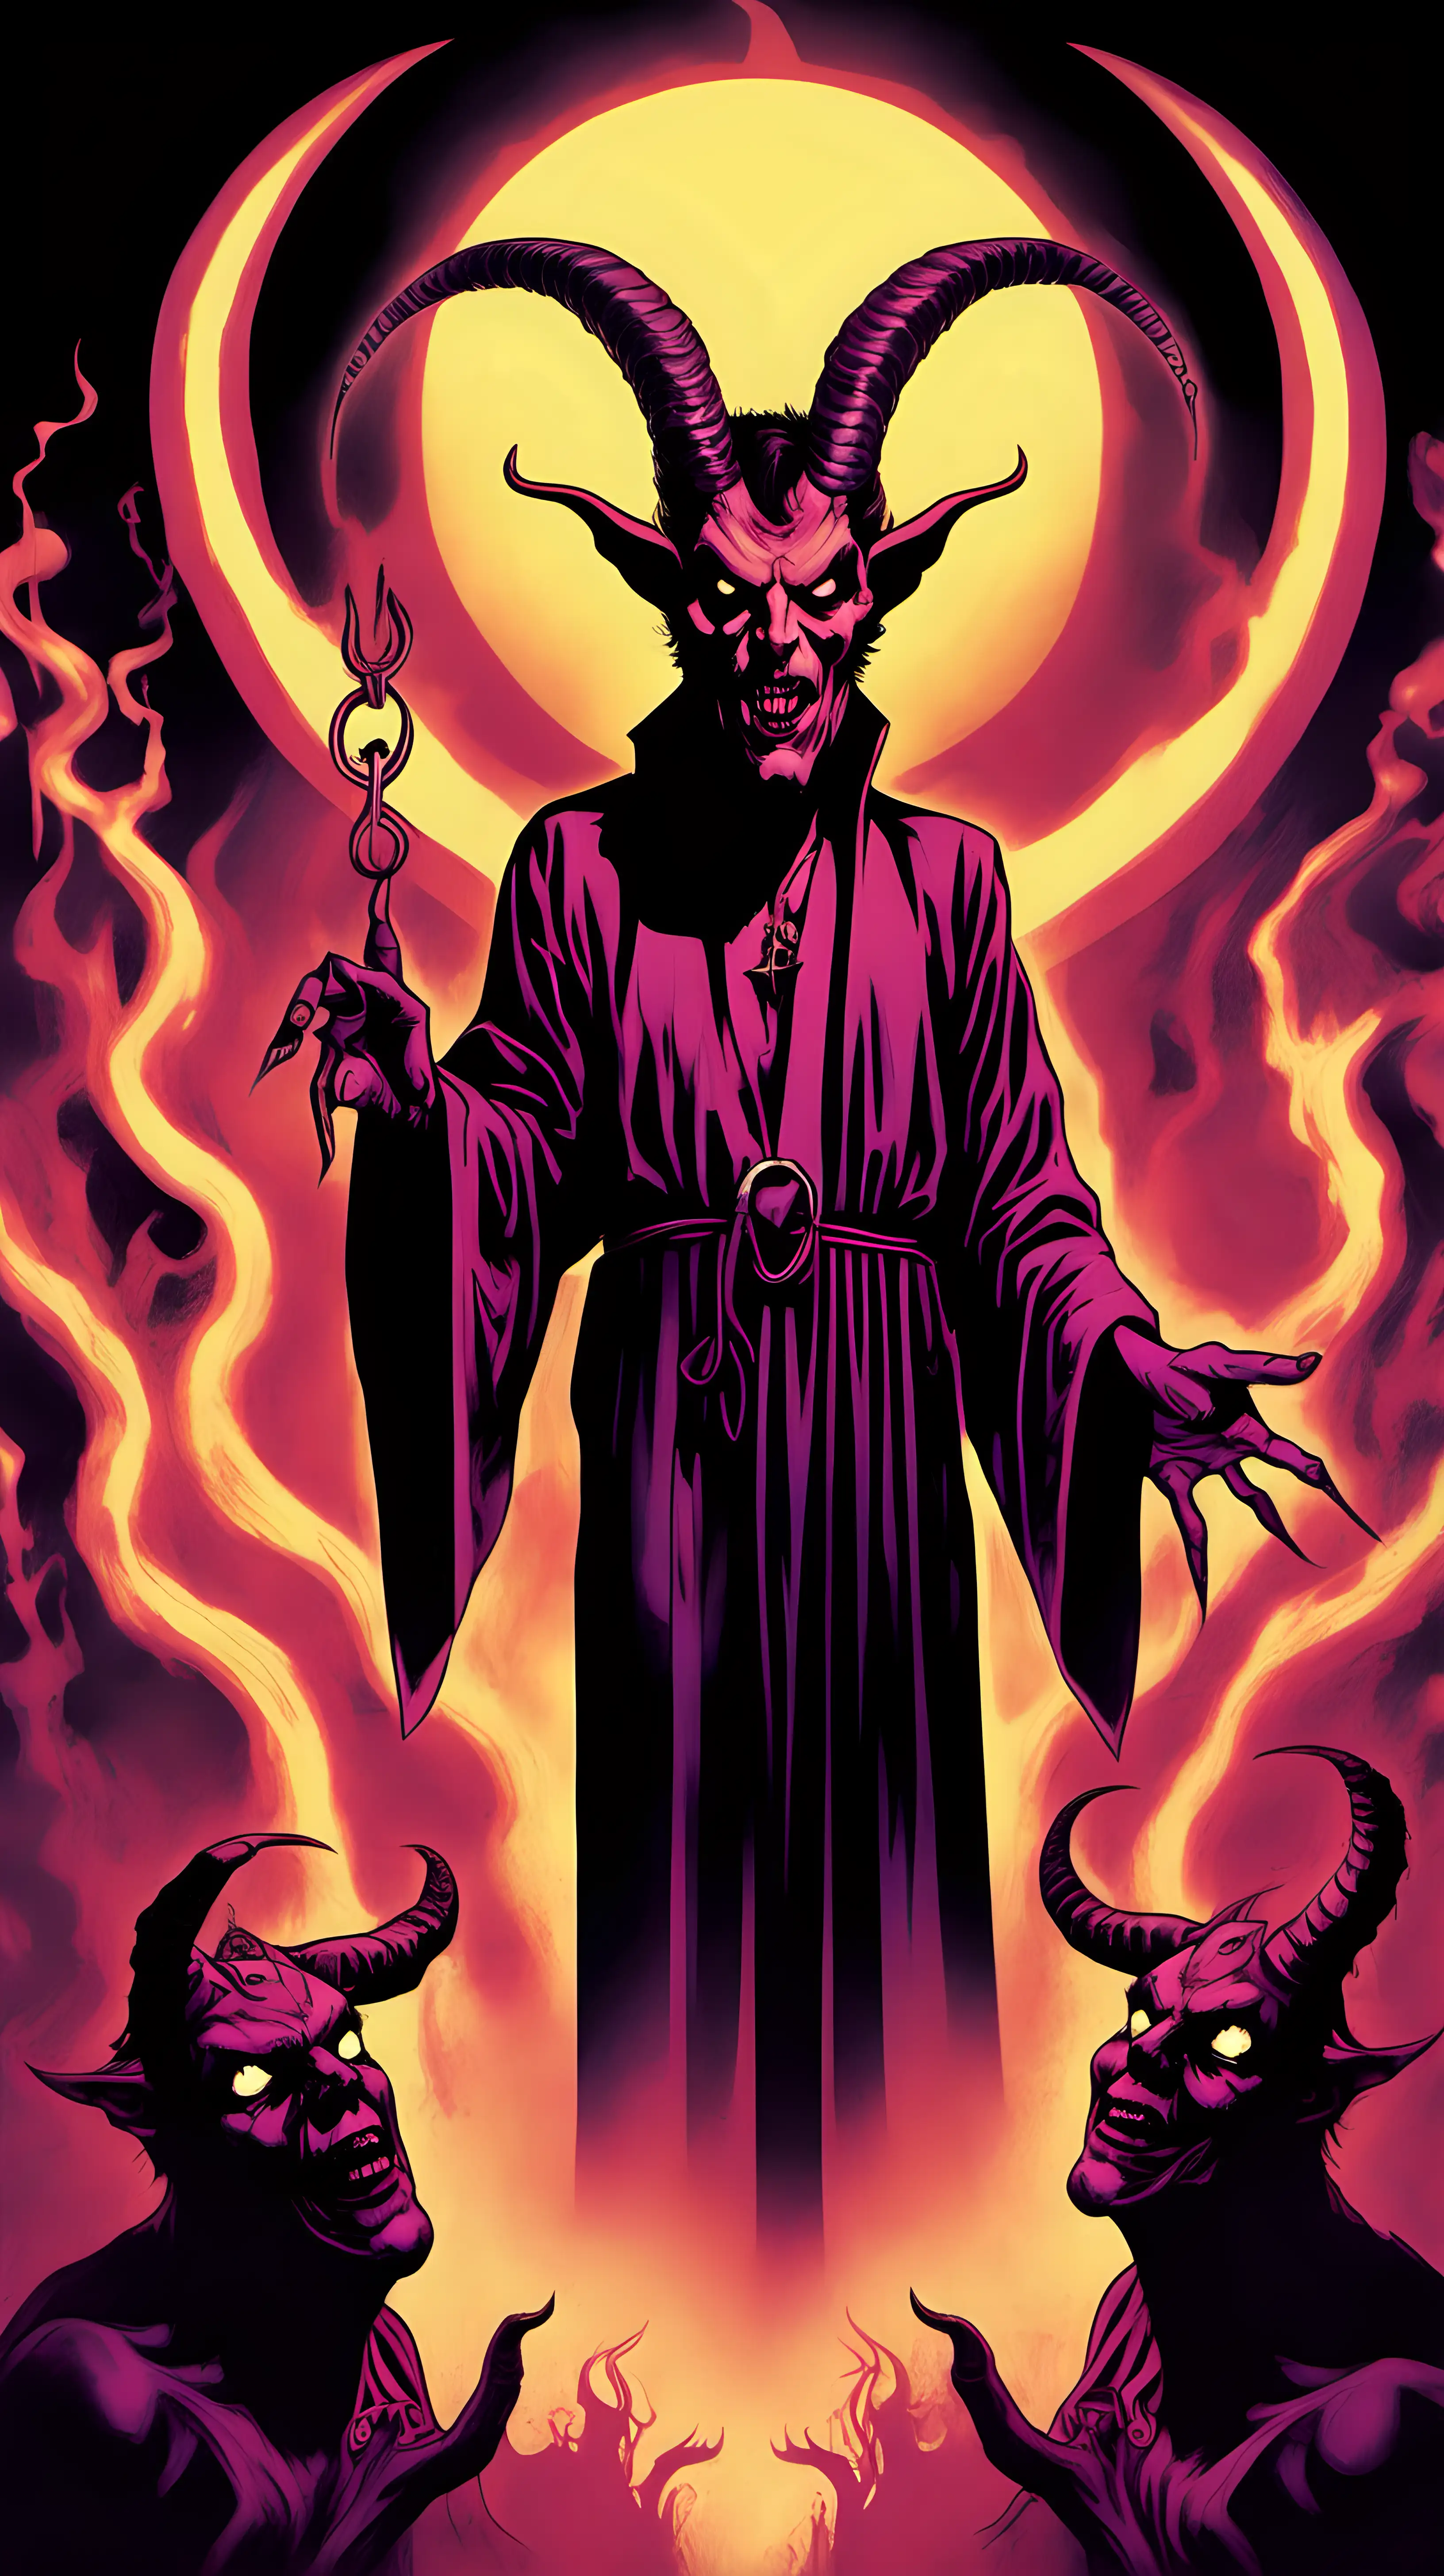 Sinister GoatLike Satan Illustration with Drew Struzan Flair